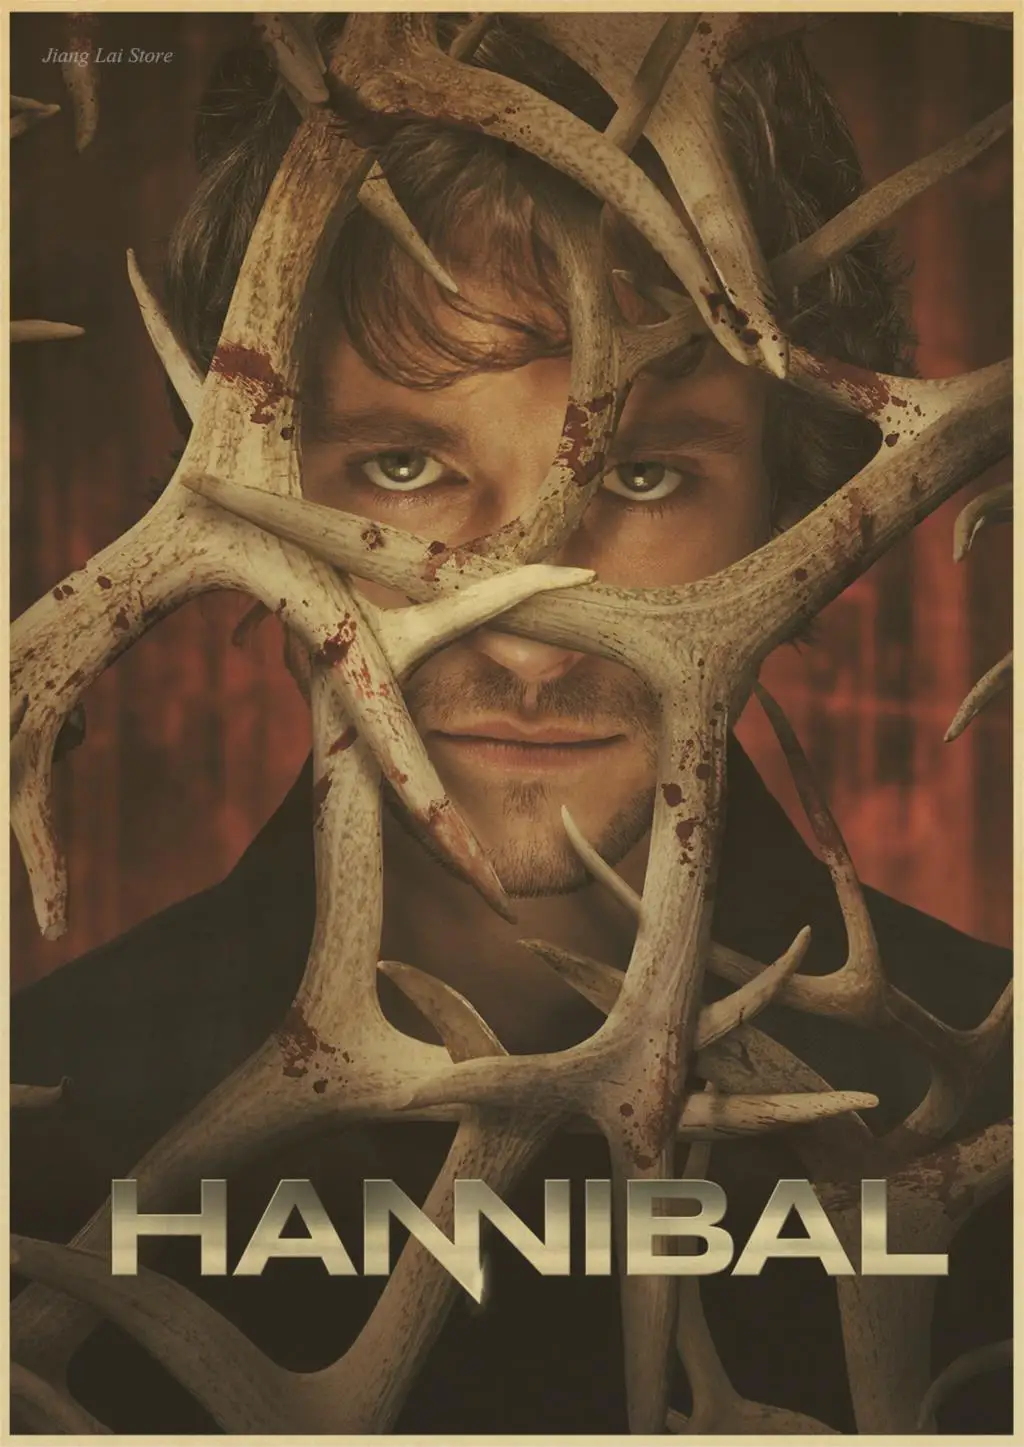 Hannibal плакат декоративная крафт-бумага живопись Макс микелсен Хью данси ужас триллер Хэллоуин живопись Ретро плакат